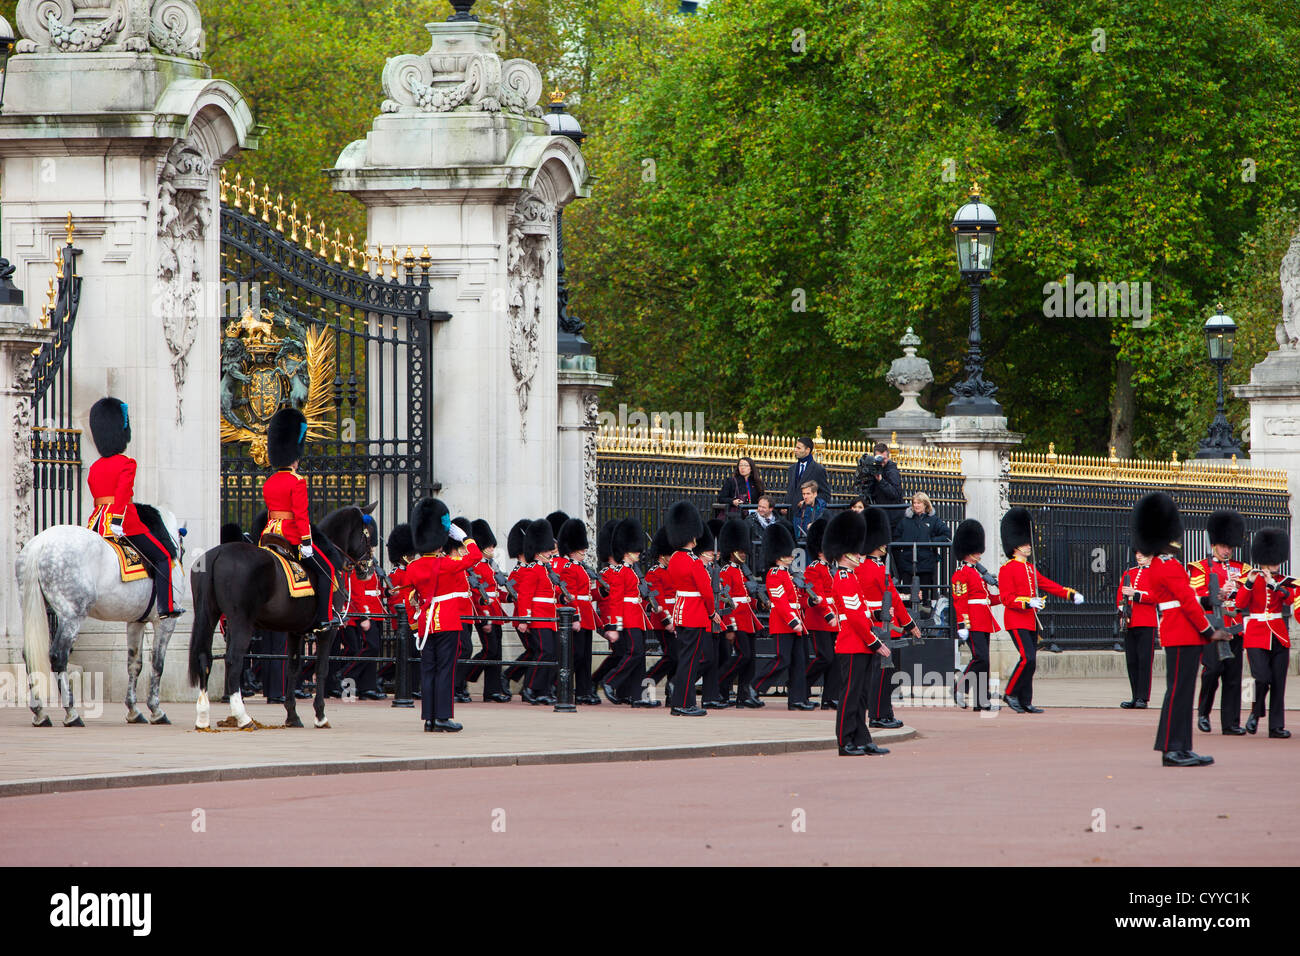 Members of the Scots Guard on parade at Buckingham Palace, London England, UK Stock Photo